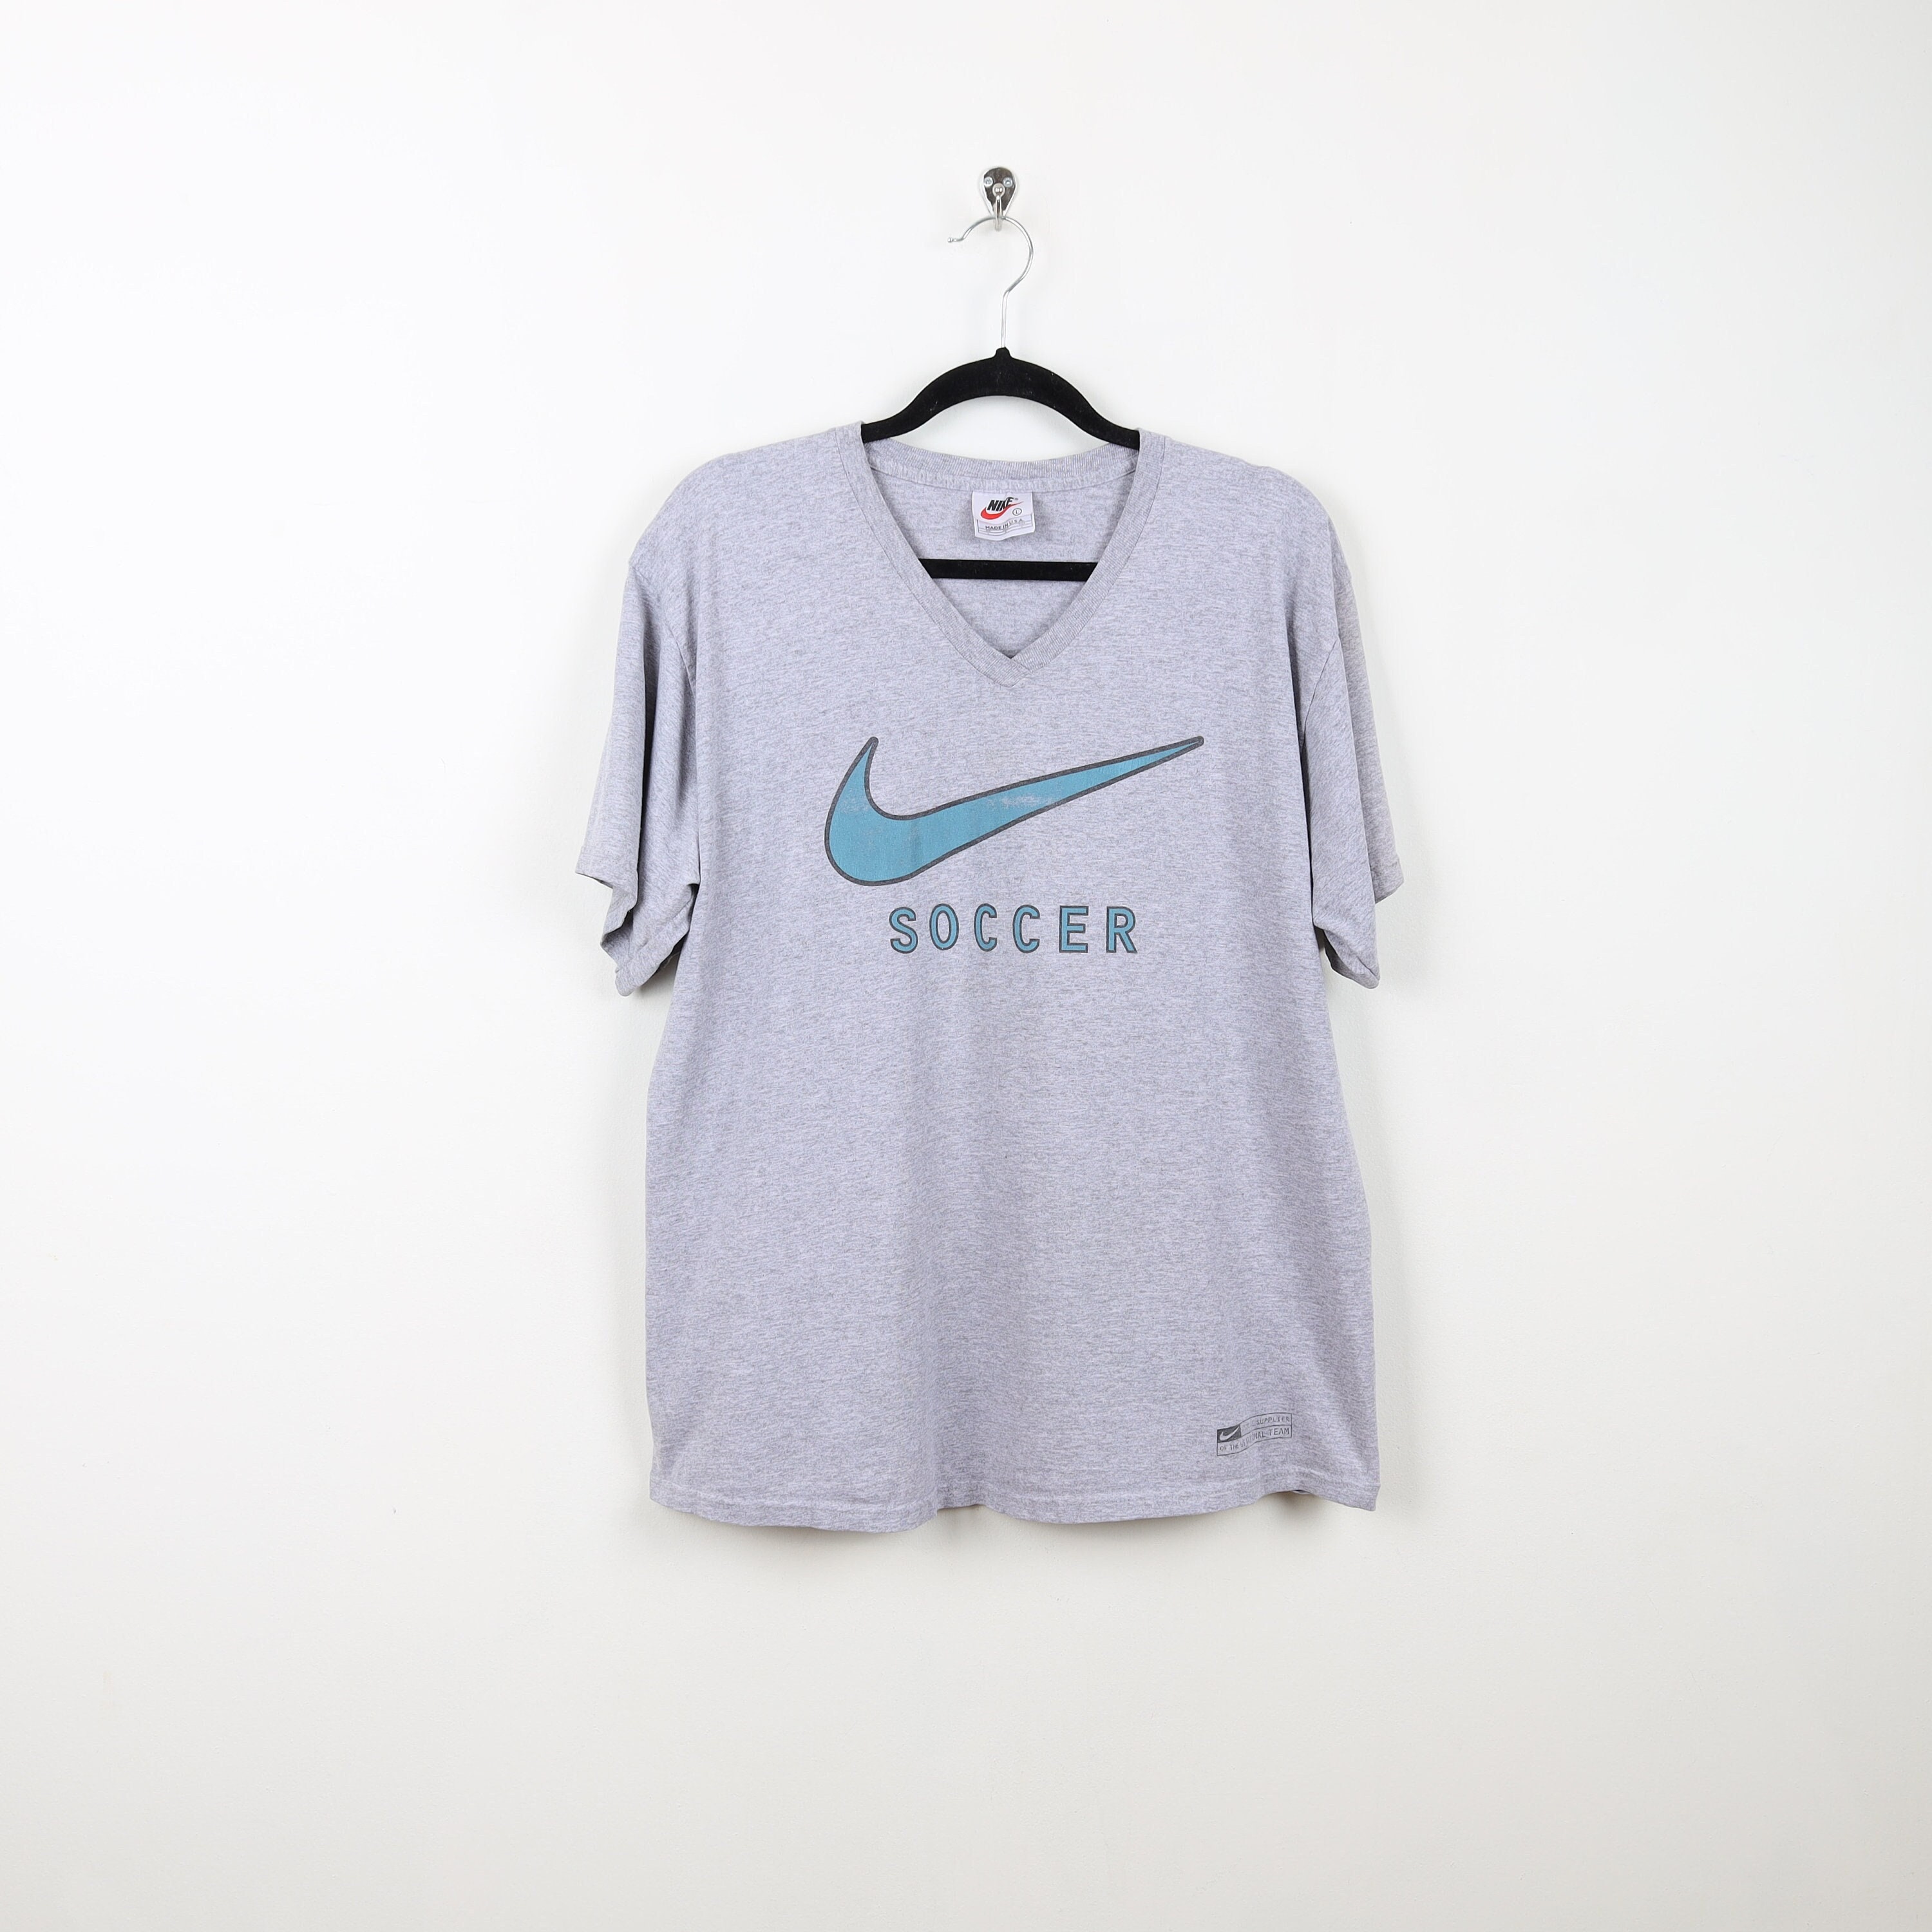 Vintage Nike Team Sports Soccer jersey. Men's